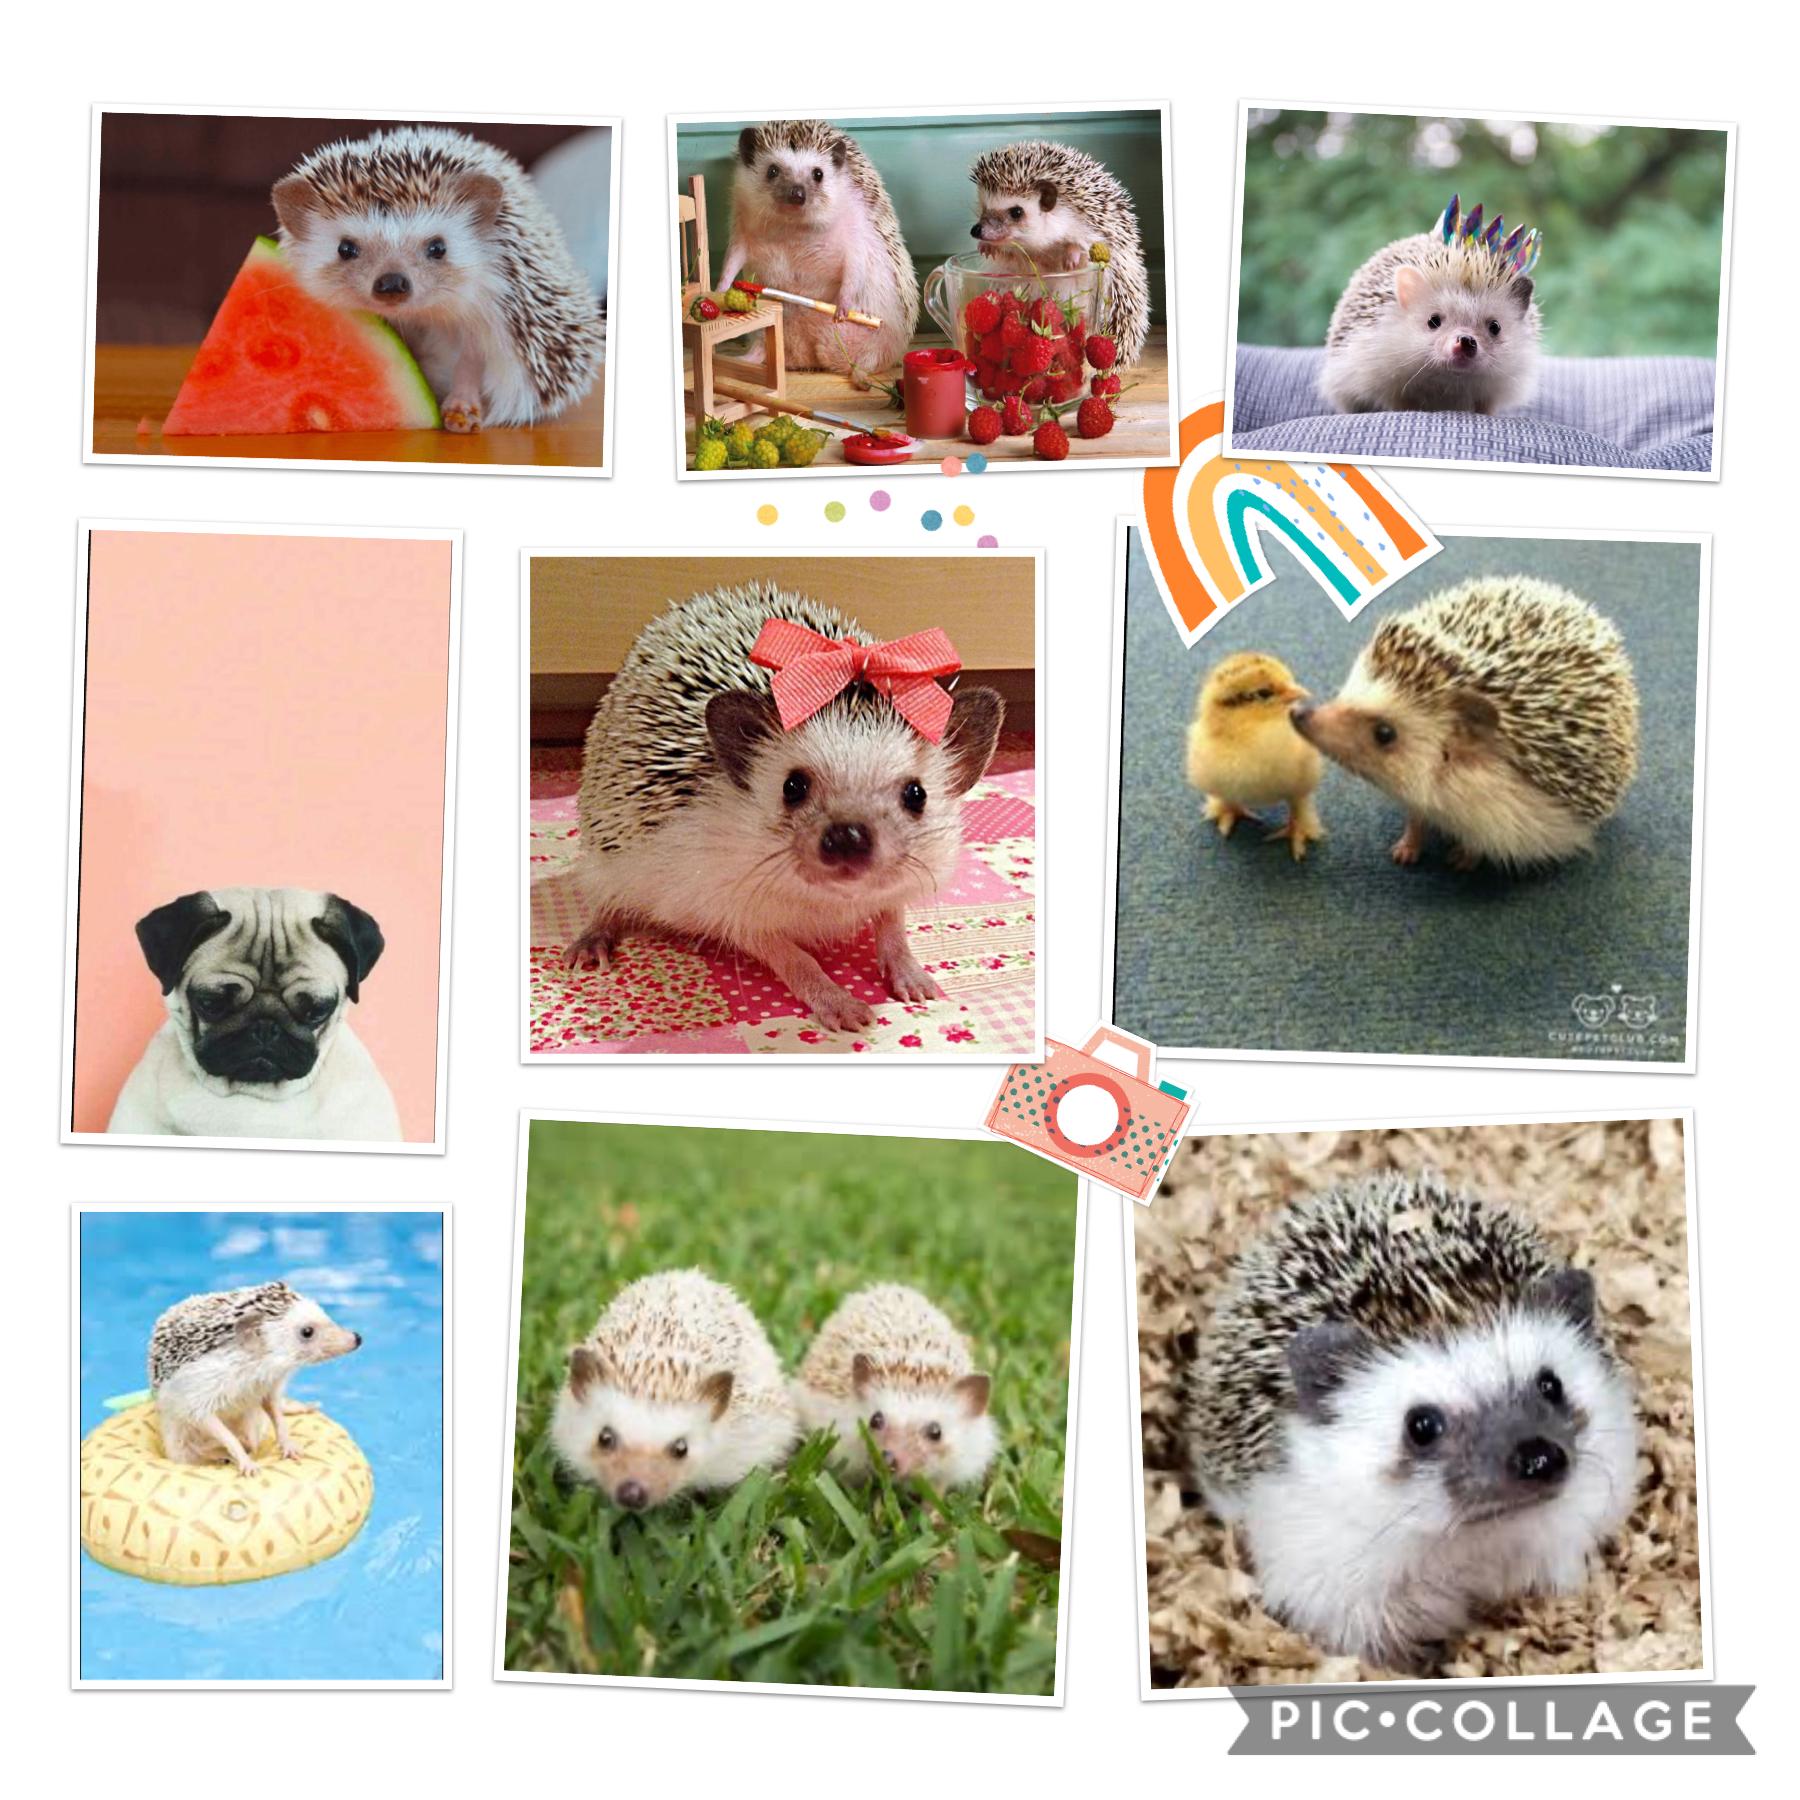 Hedgehogs are so cute!!🦋🦋